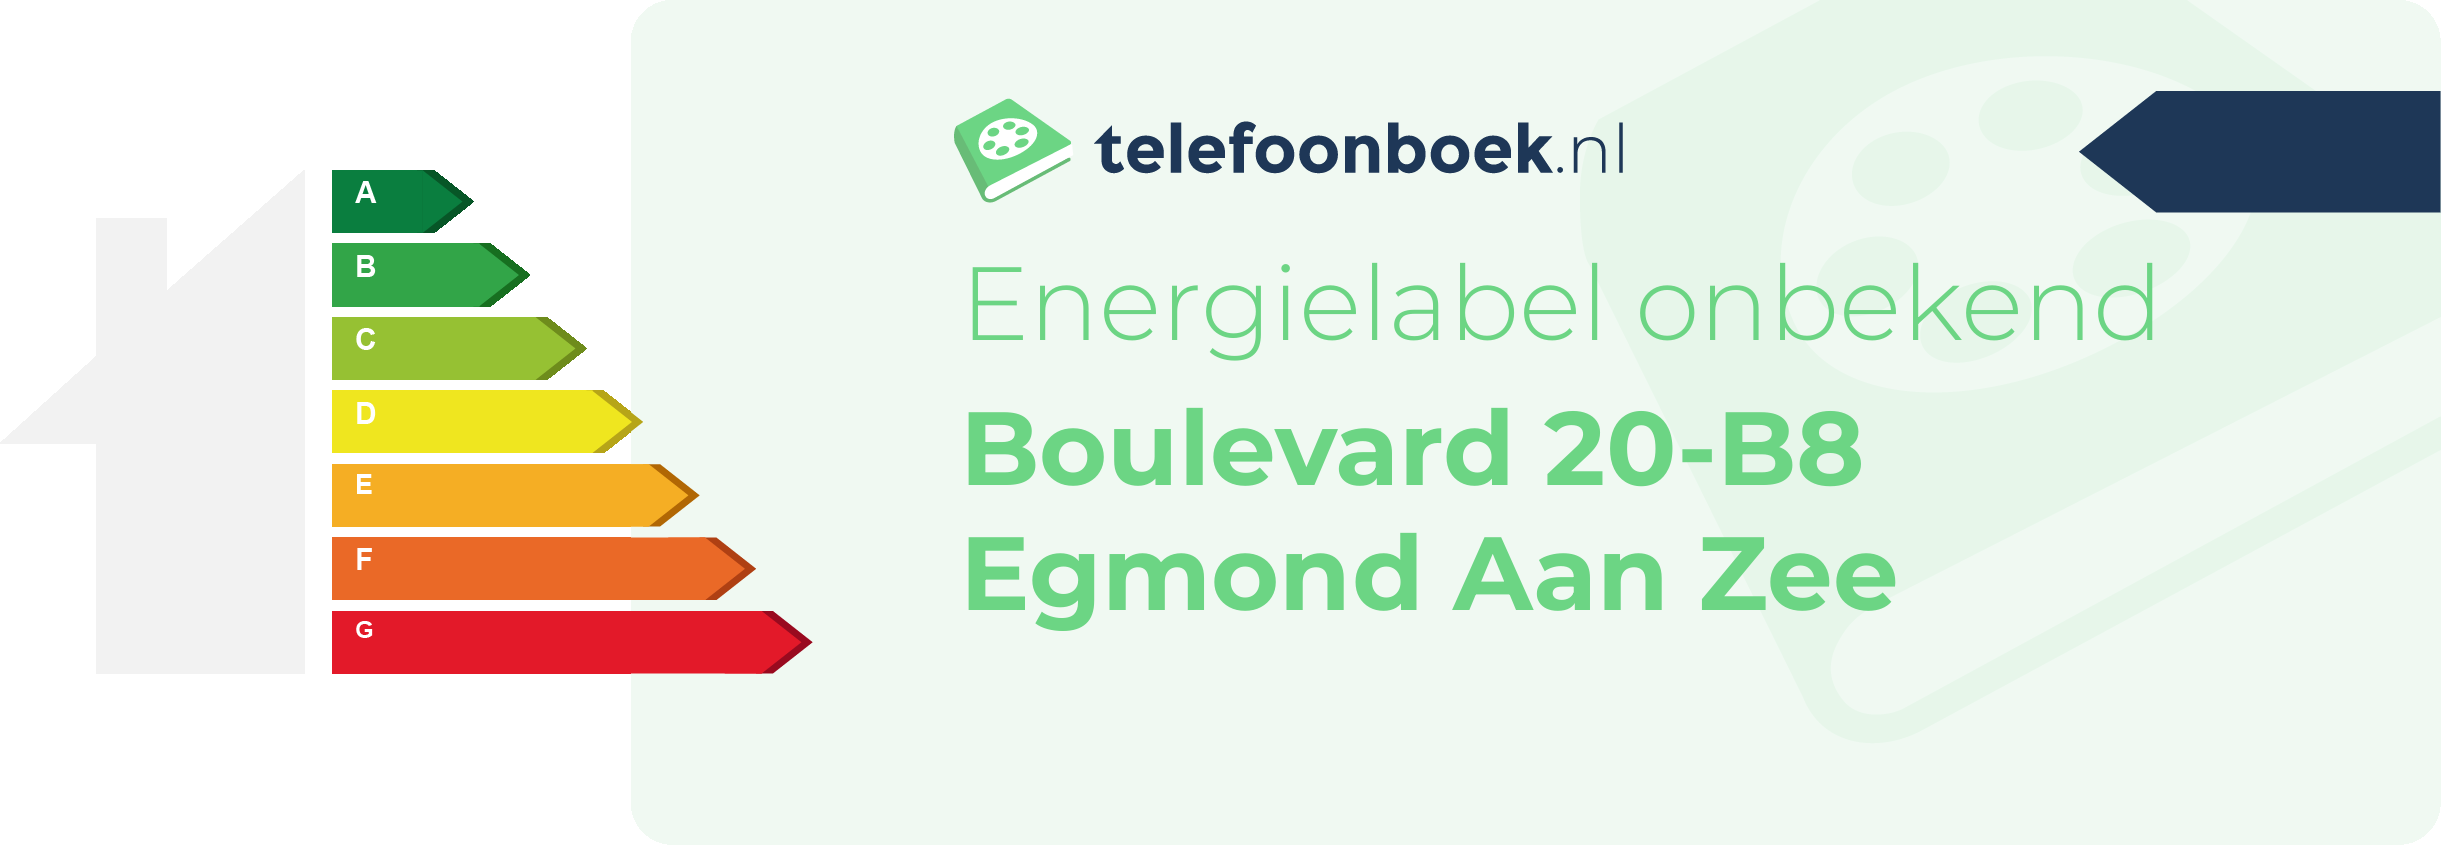 Energielabel Boulevard 20-B8 Egmond Aan Zee